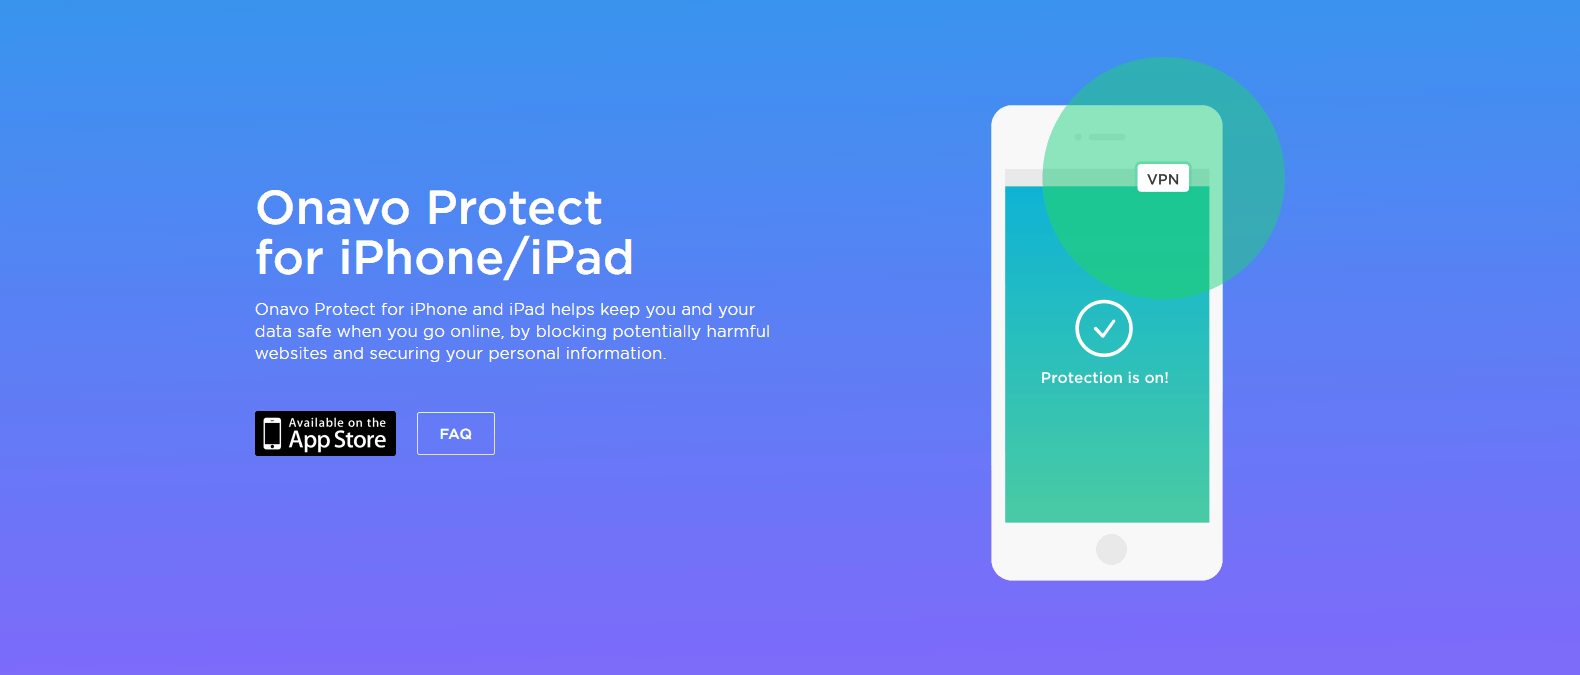 Facebook Onavo Protect iOS